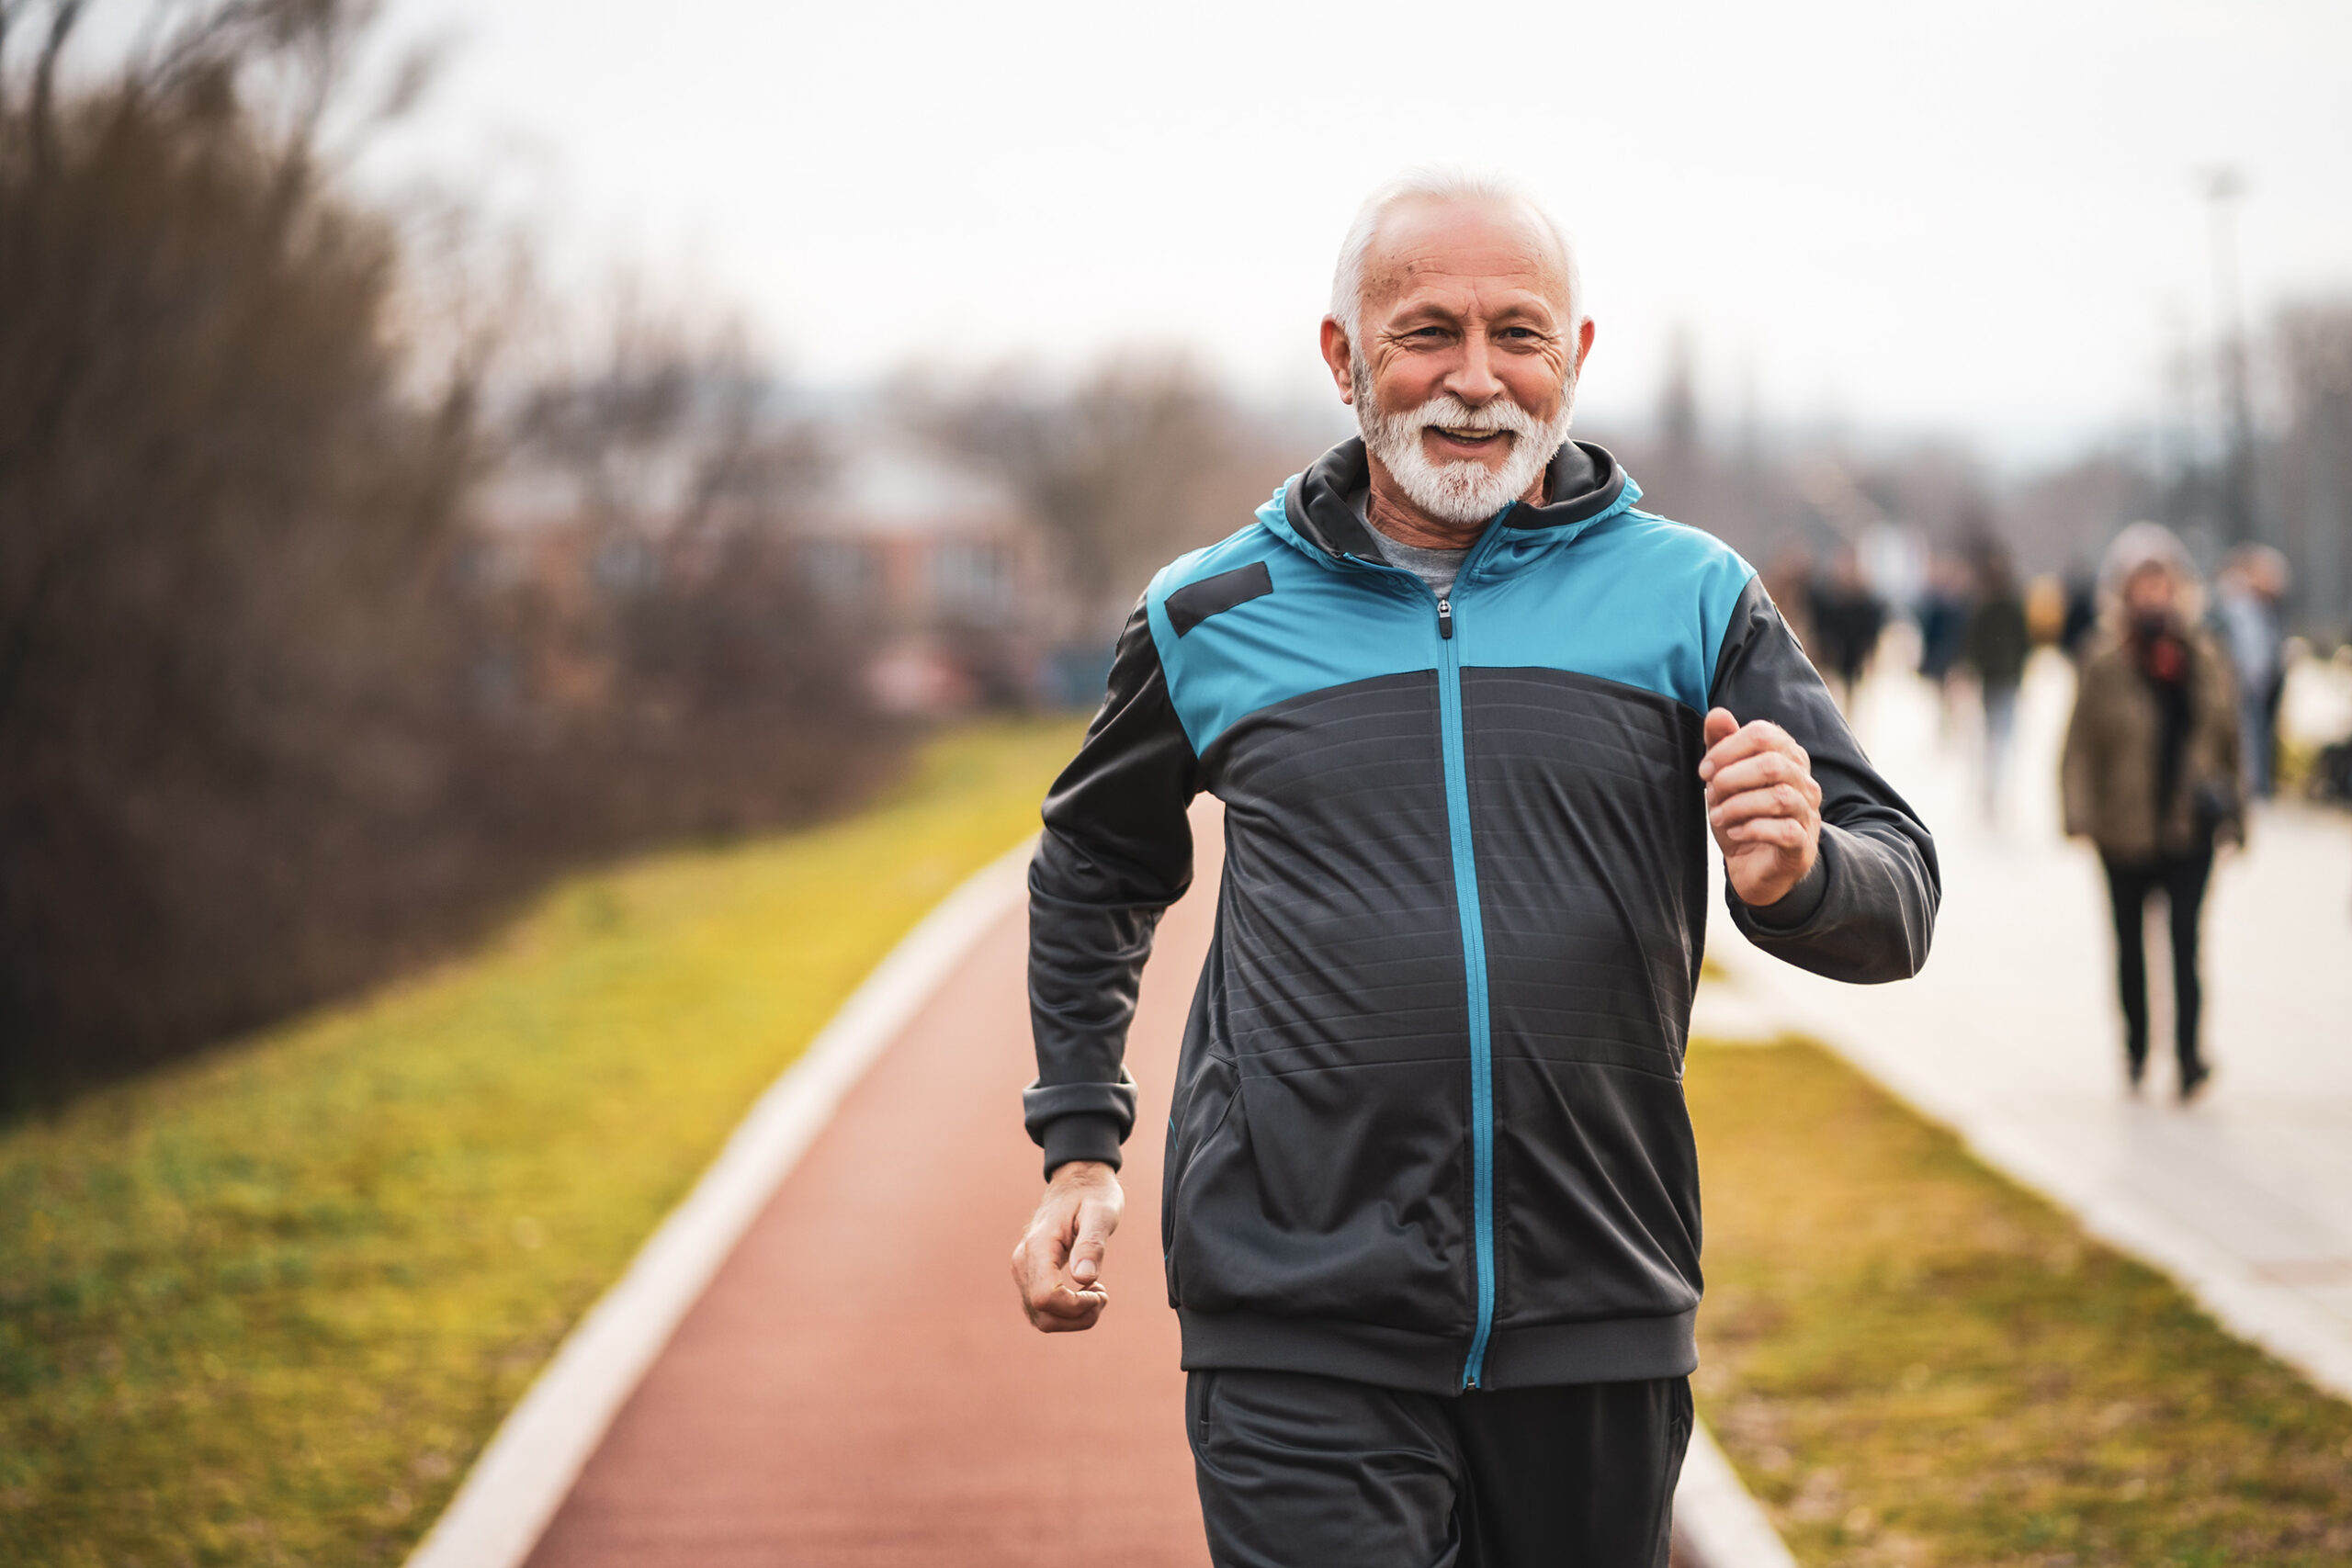 Active senior man is jogging. Healthy retirement lifestyle.